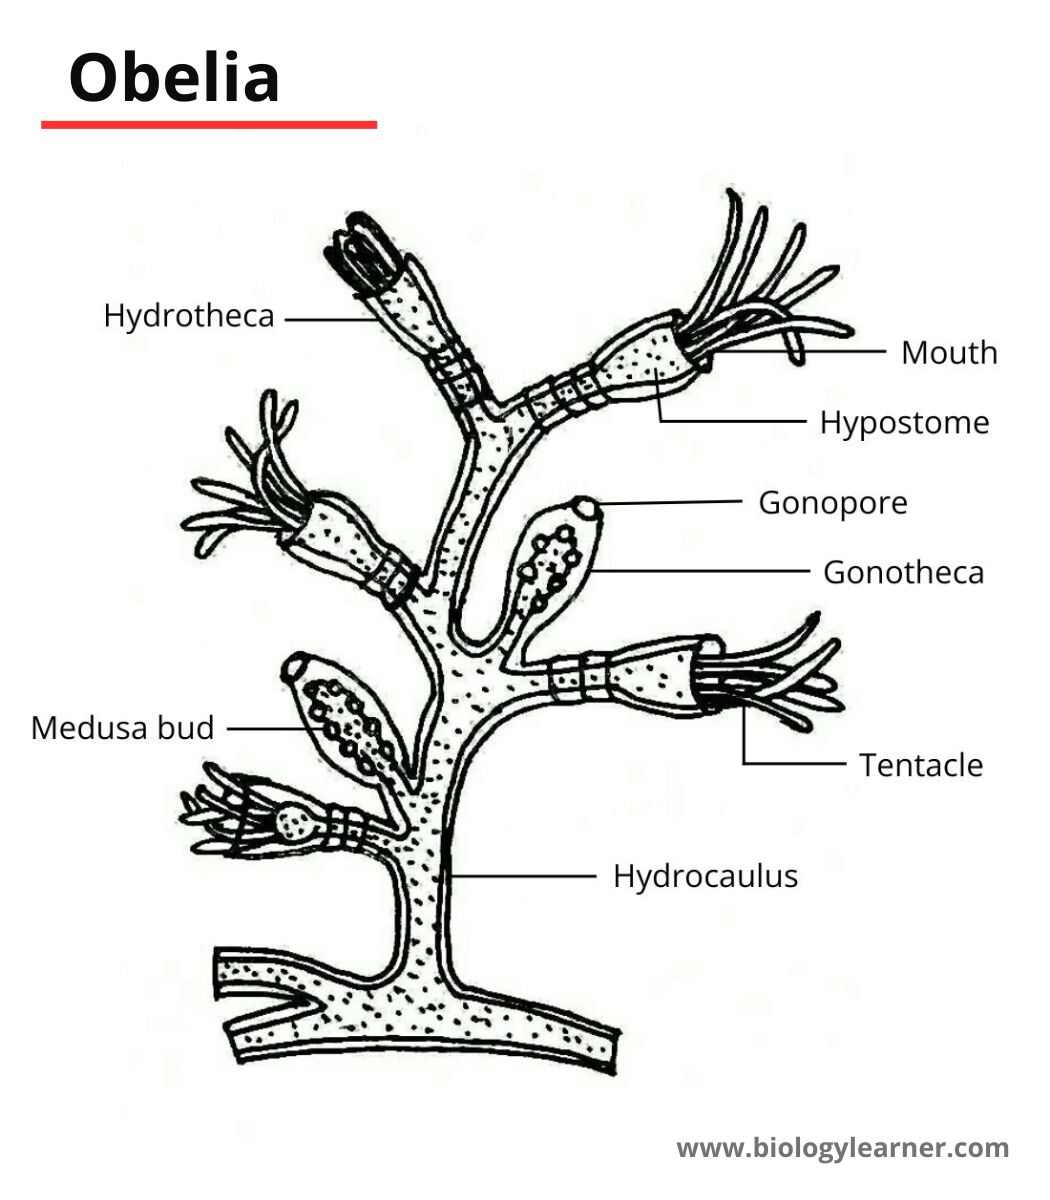 Obelia diagram